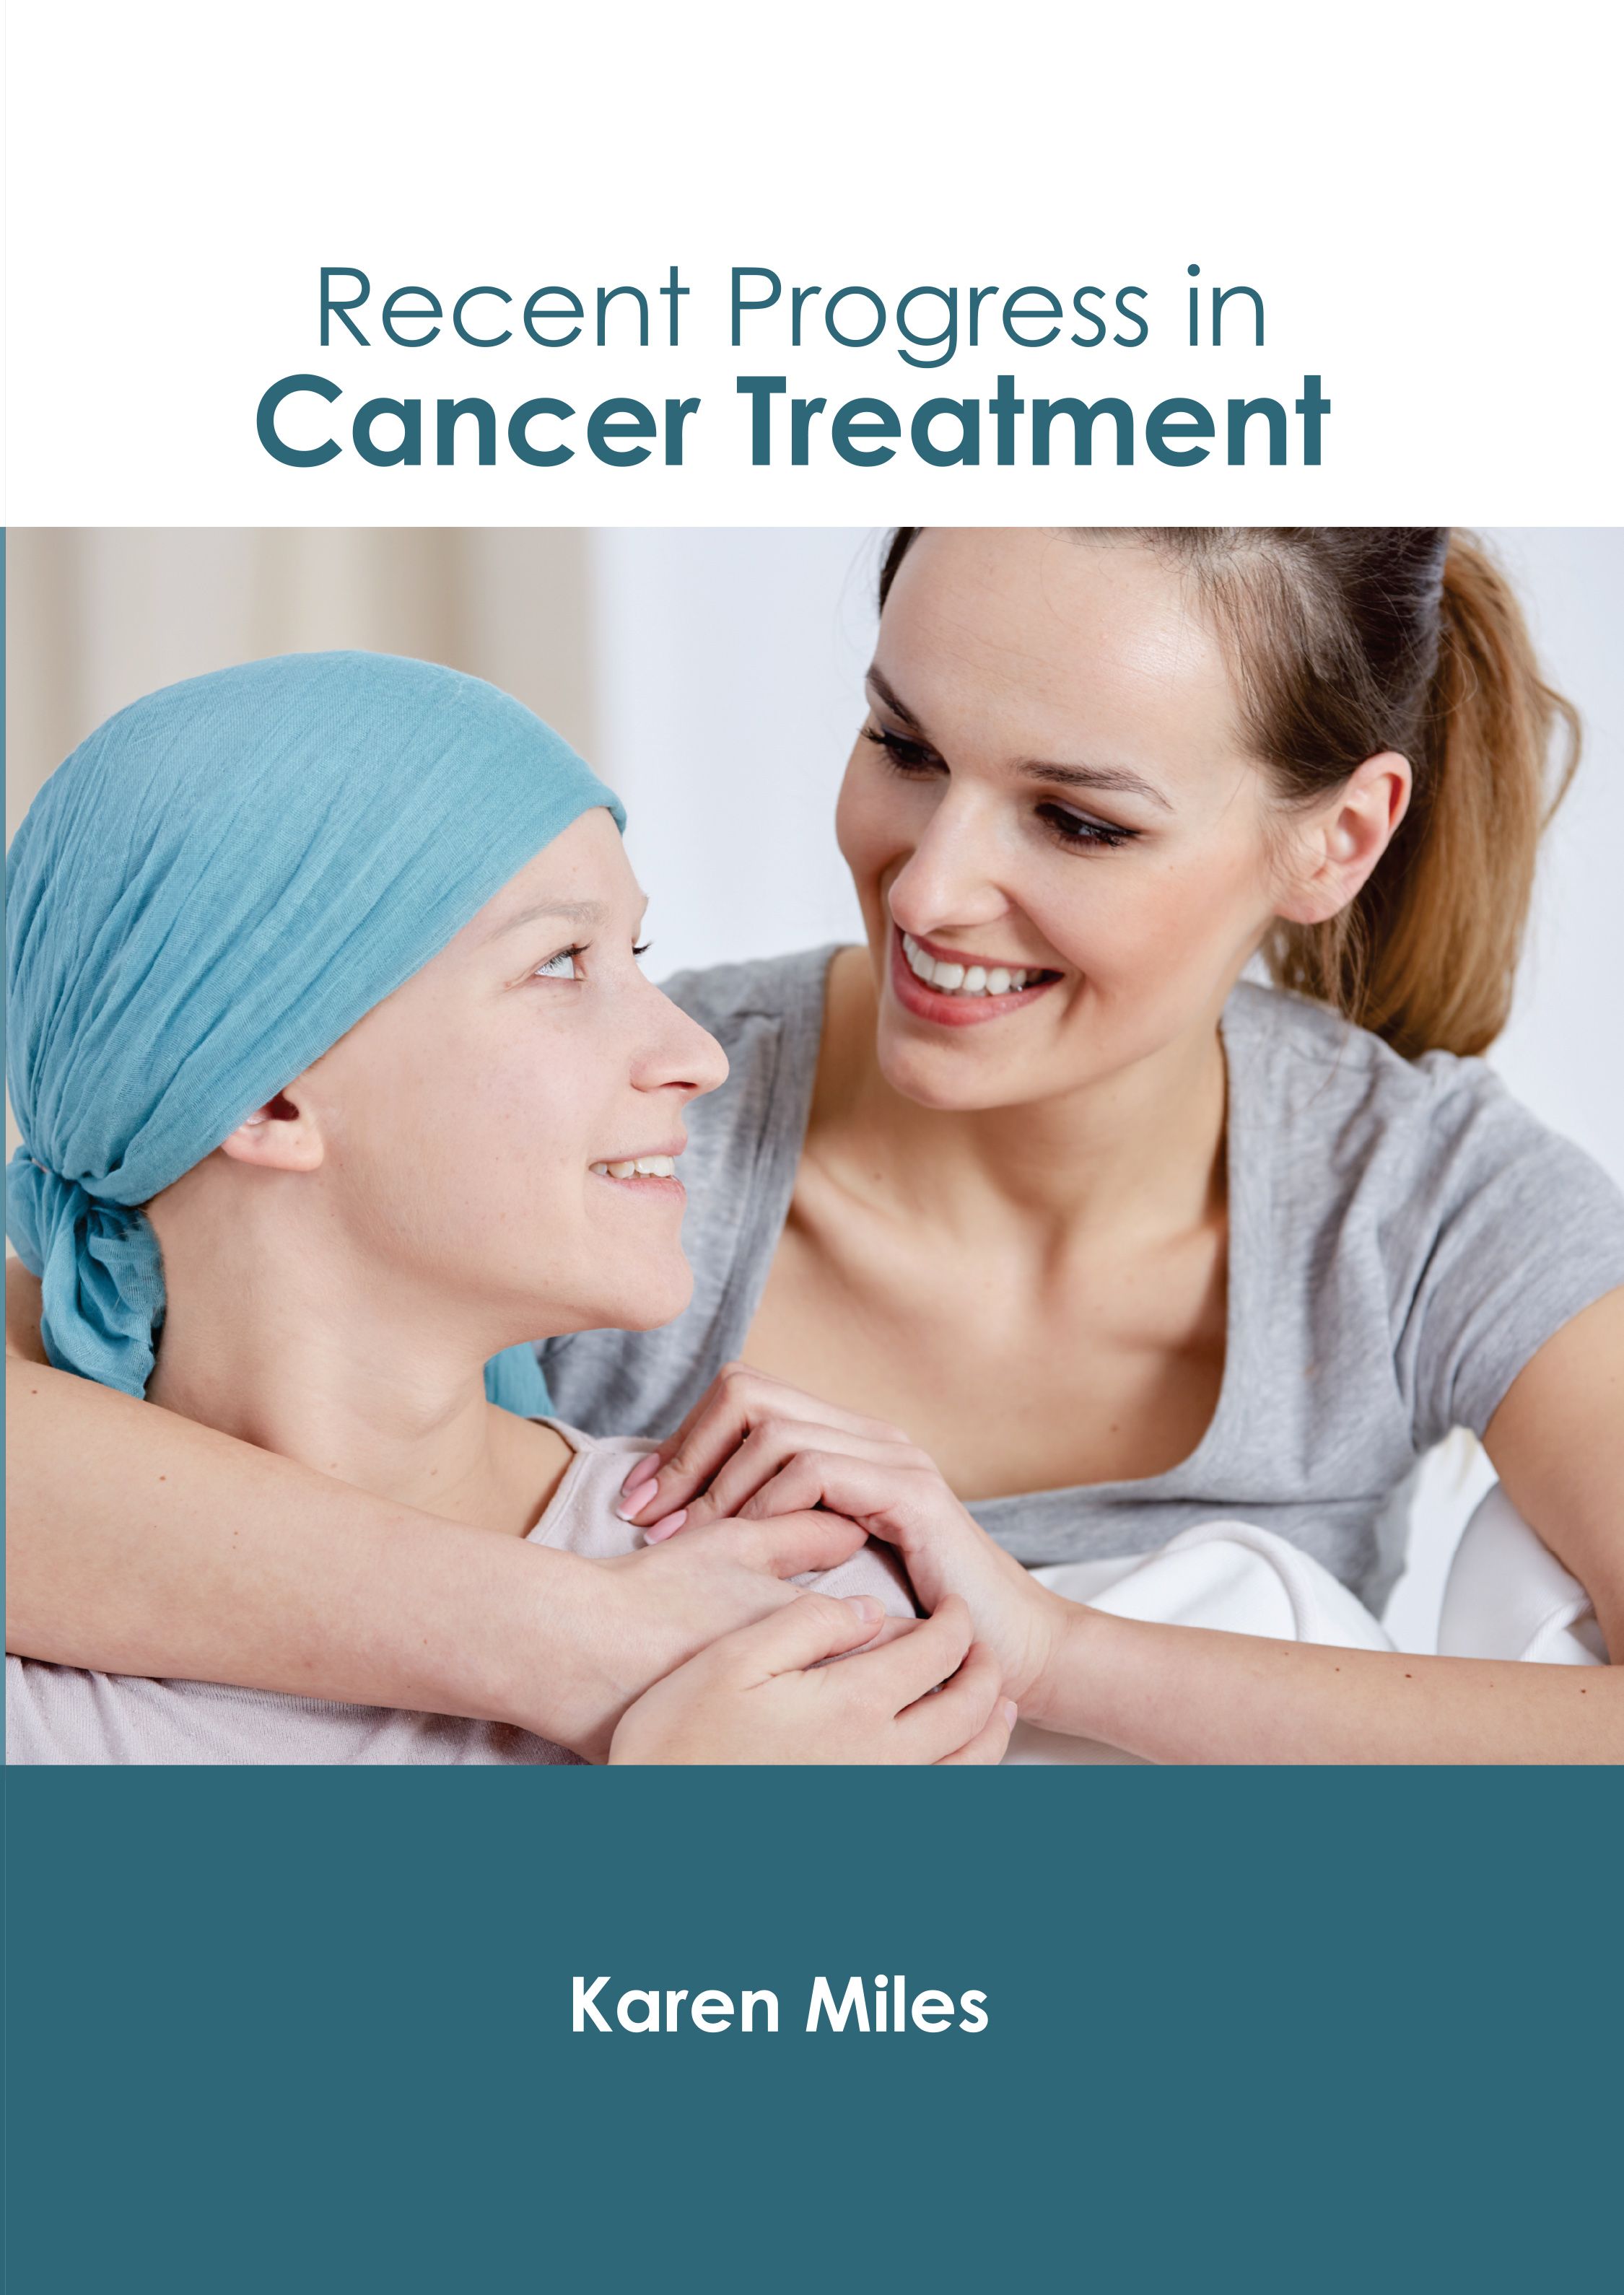 RECENT PROGRESS IN CANCER TREATMENT